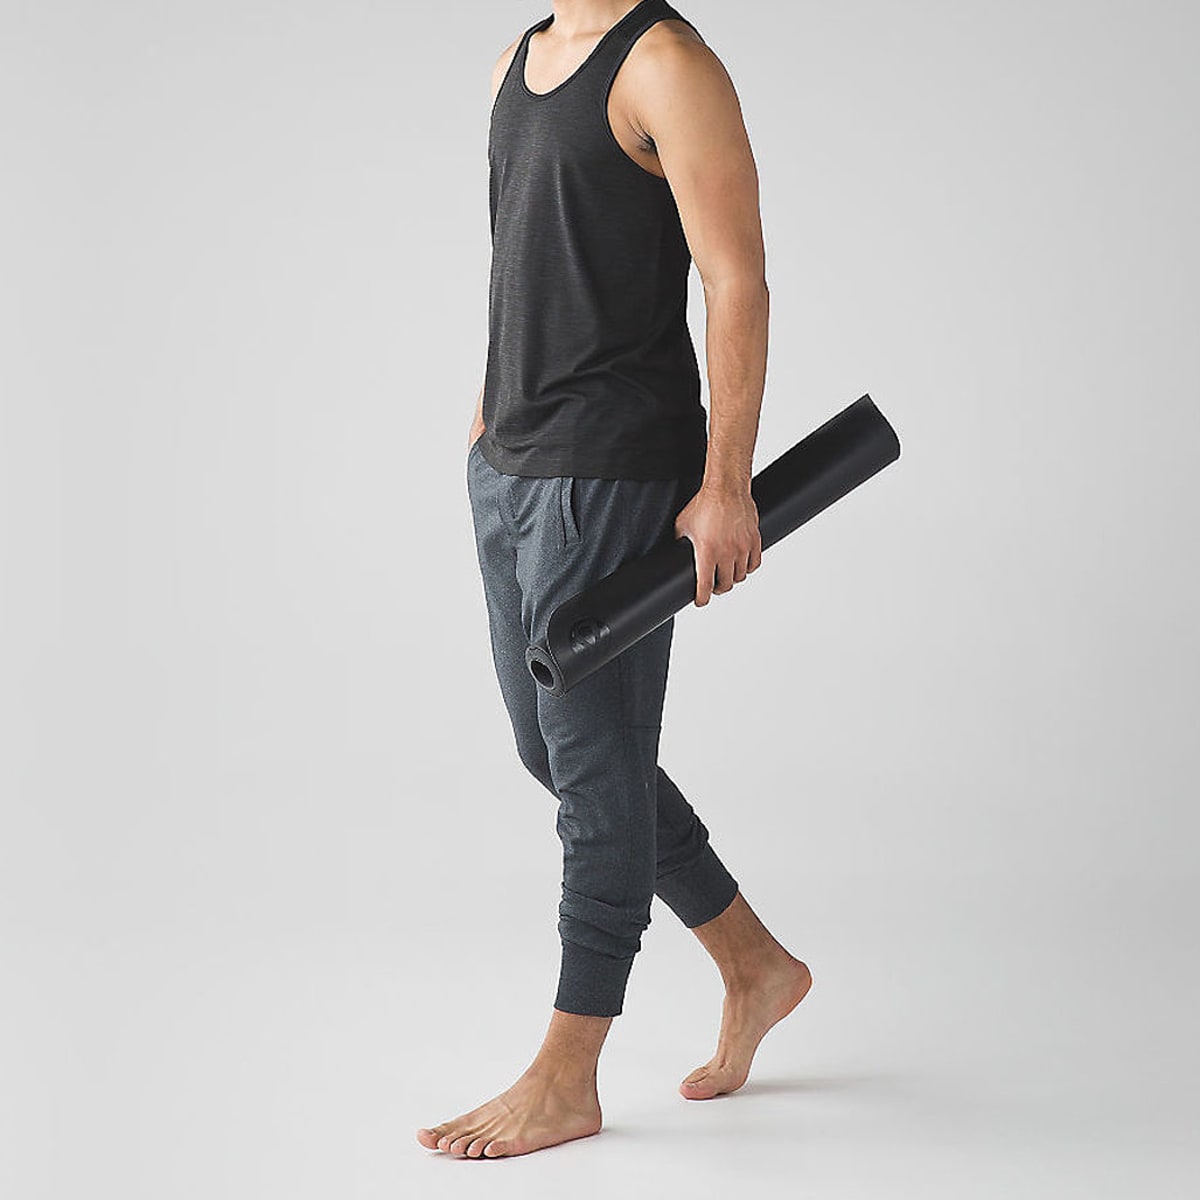 IKARUS yoga pants men | The most comfortable pants | Joggers dark grey –  IKARUS Sports & Lifestyle GmbH